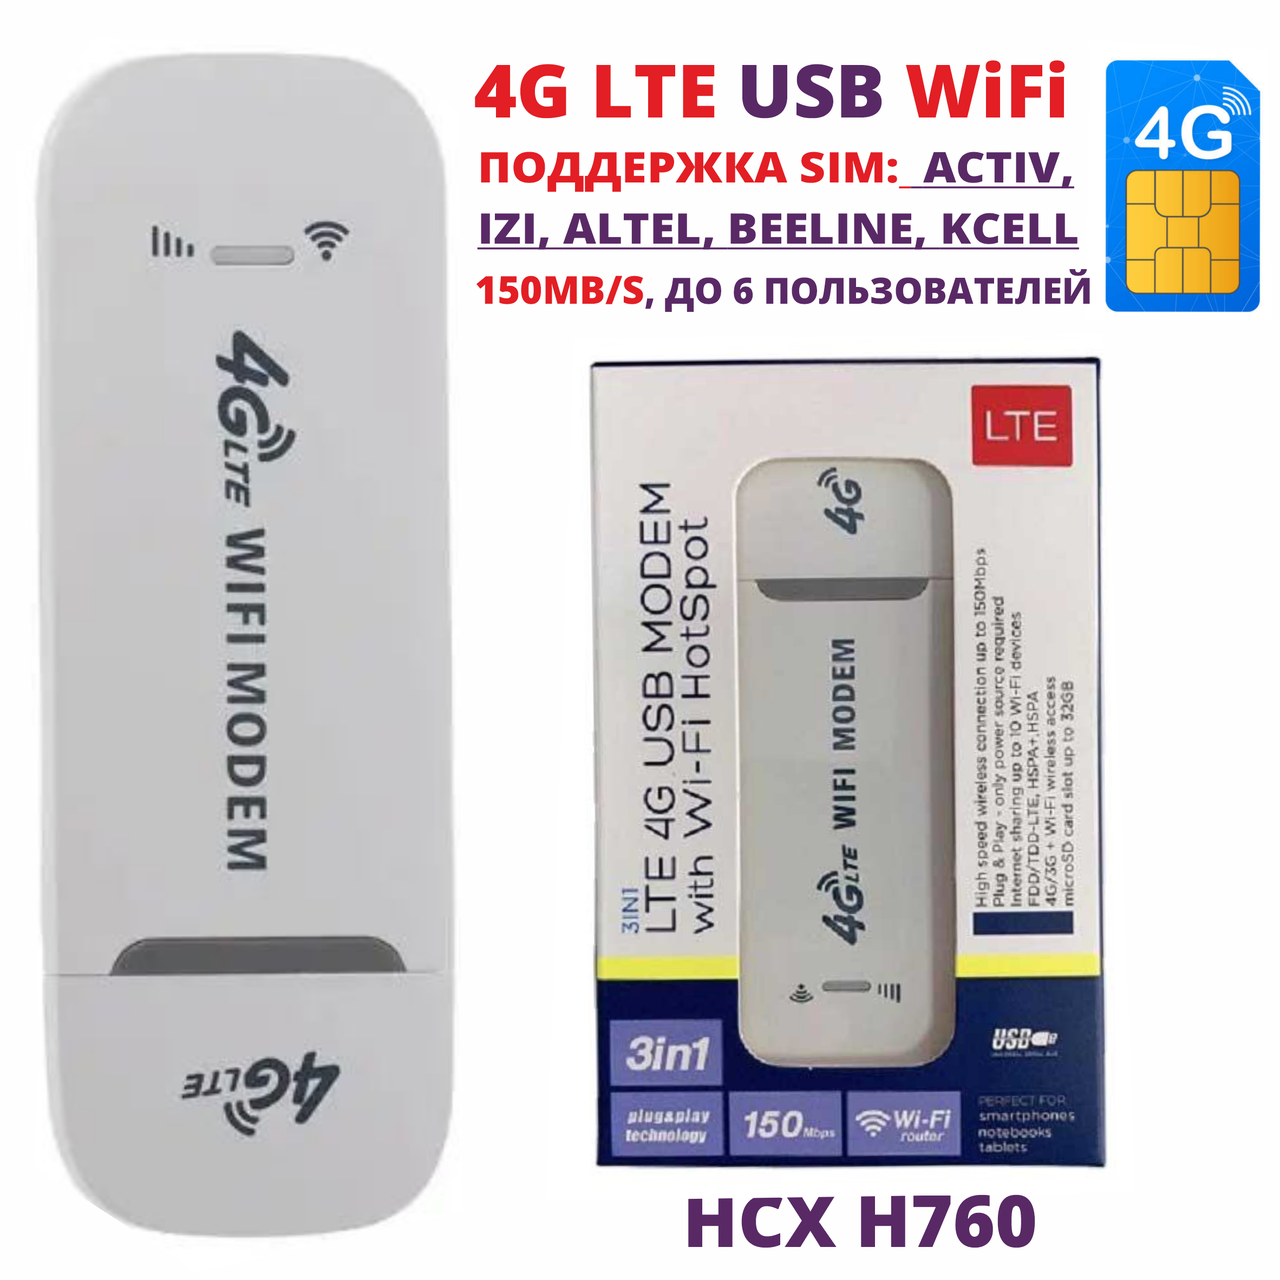 USB WiFi Модем роутер LTE 4G 3G беспроводной 150 мб/с SIM карты СИМ Tele2 Билайн Актив Kcell Altel IZI, фото 1